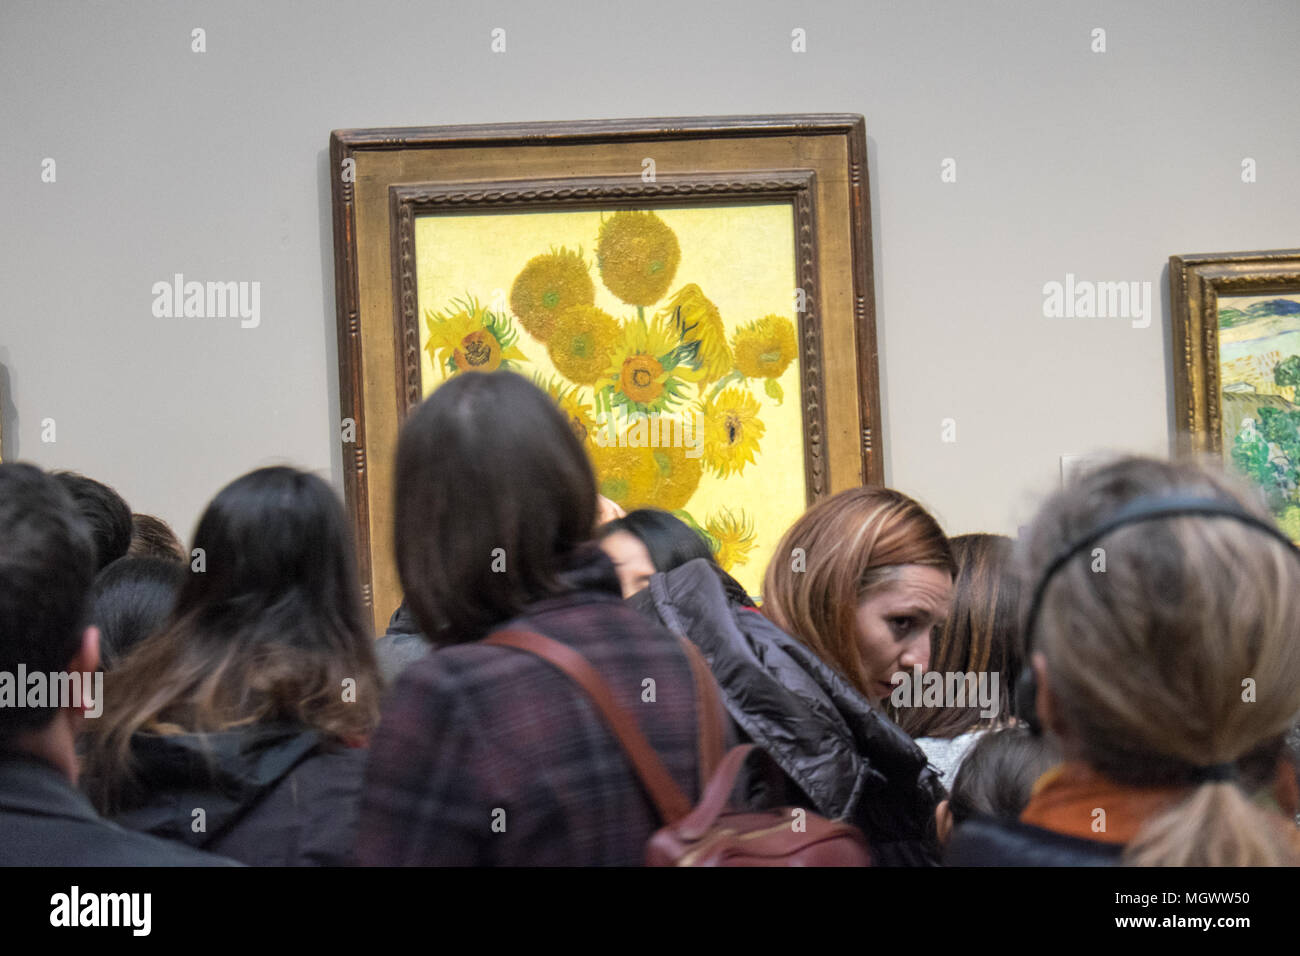 Photographing,mobile,camera,phones,Vincent,Van Gogh,Sunflowers,painting,National Gallery,Trafalgar Square,London,England,Great Britain,GB,U.K.,UK, Stock Photo